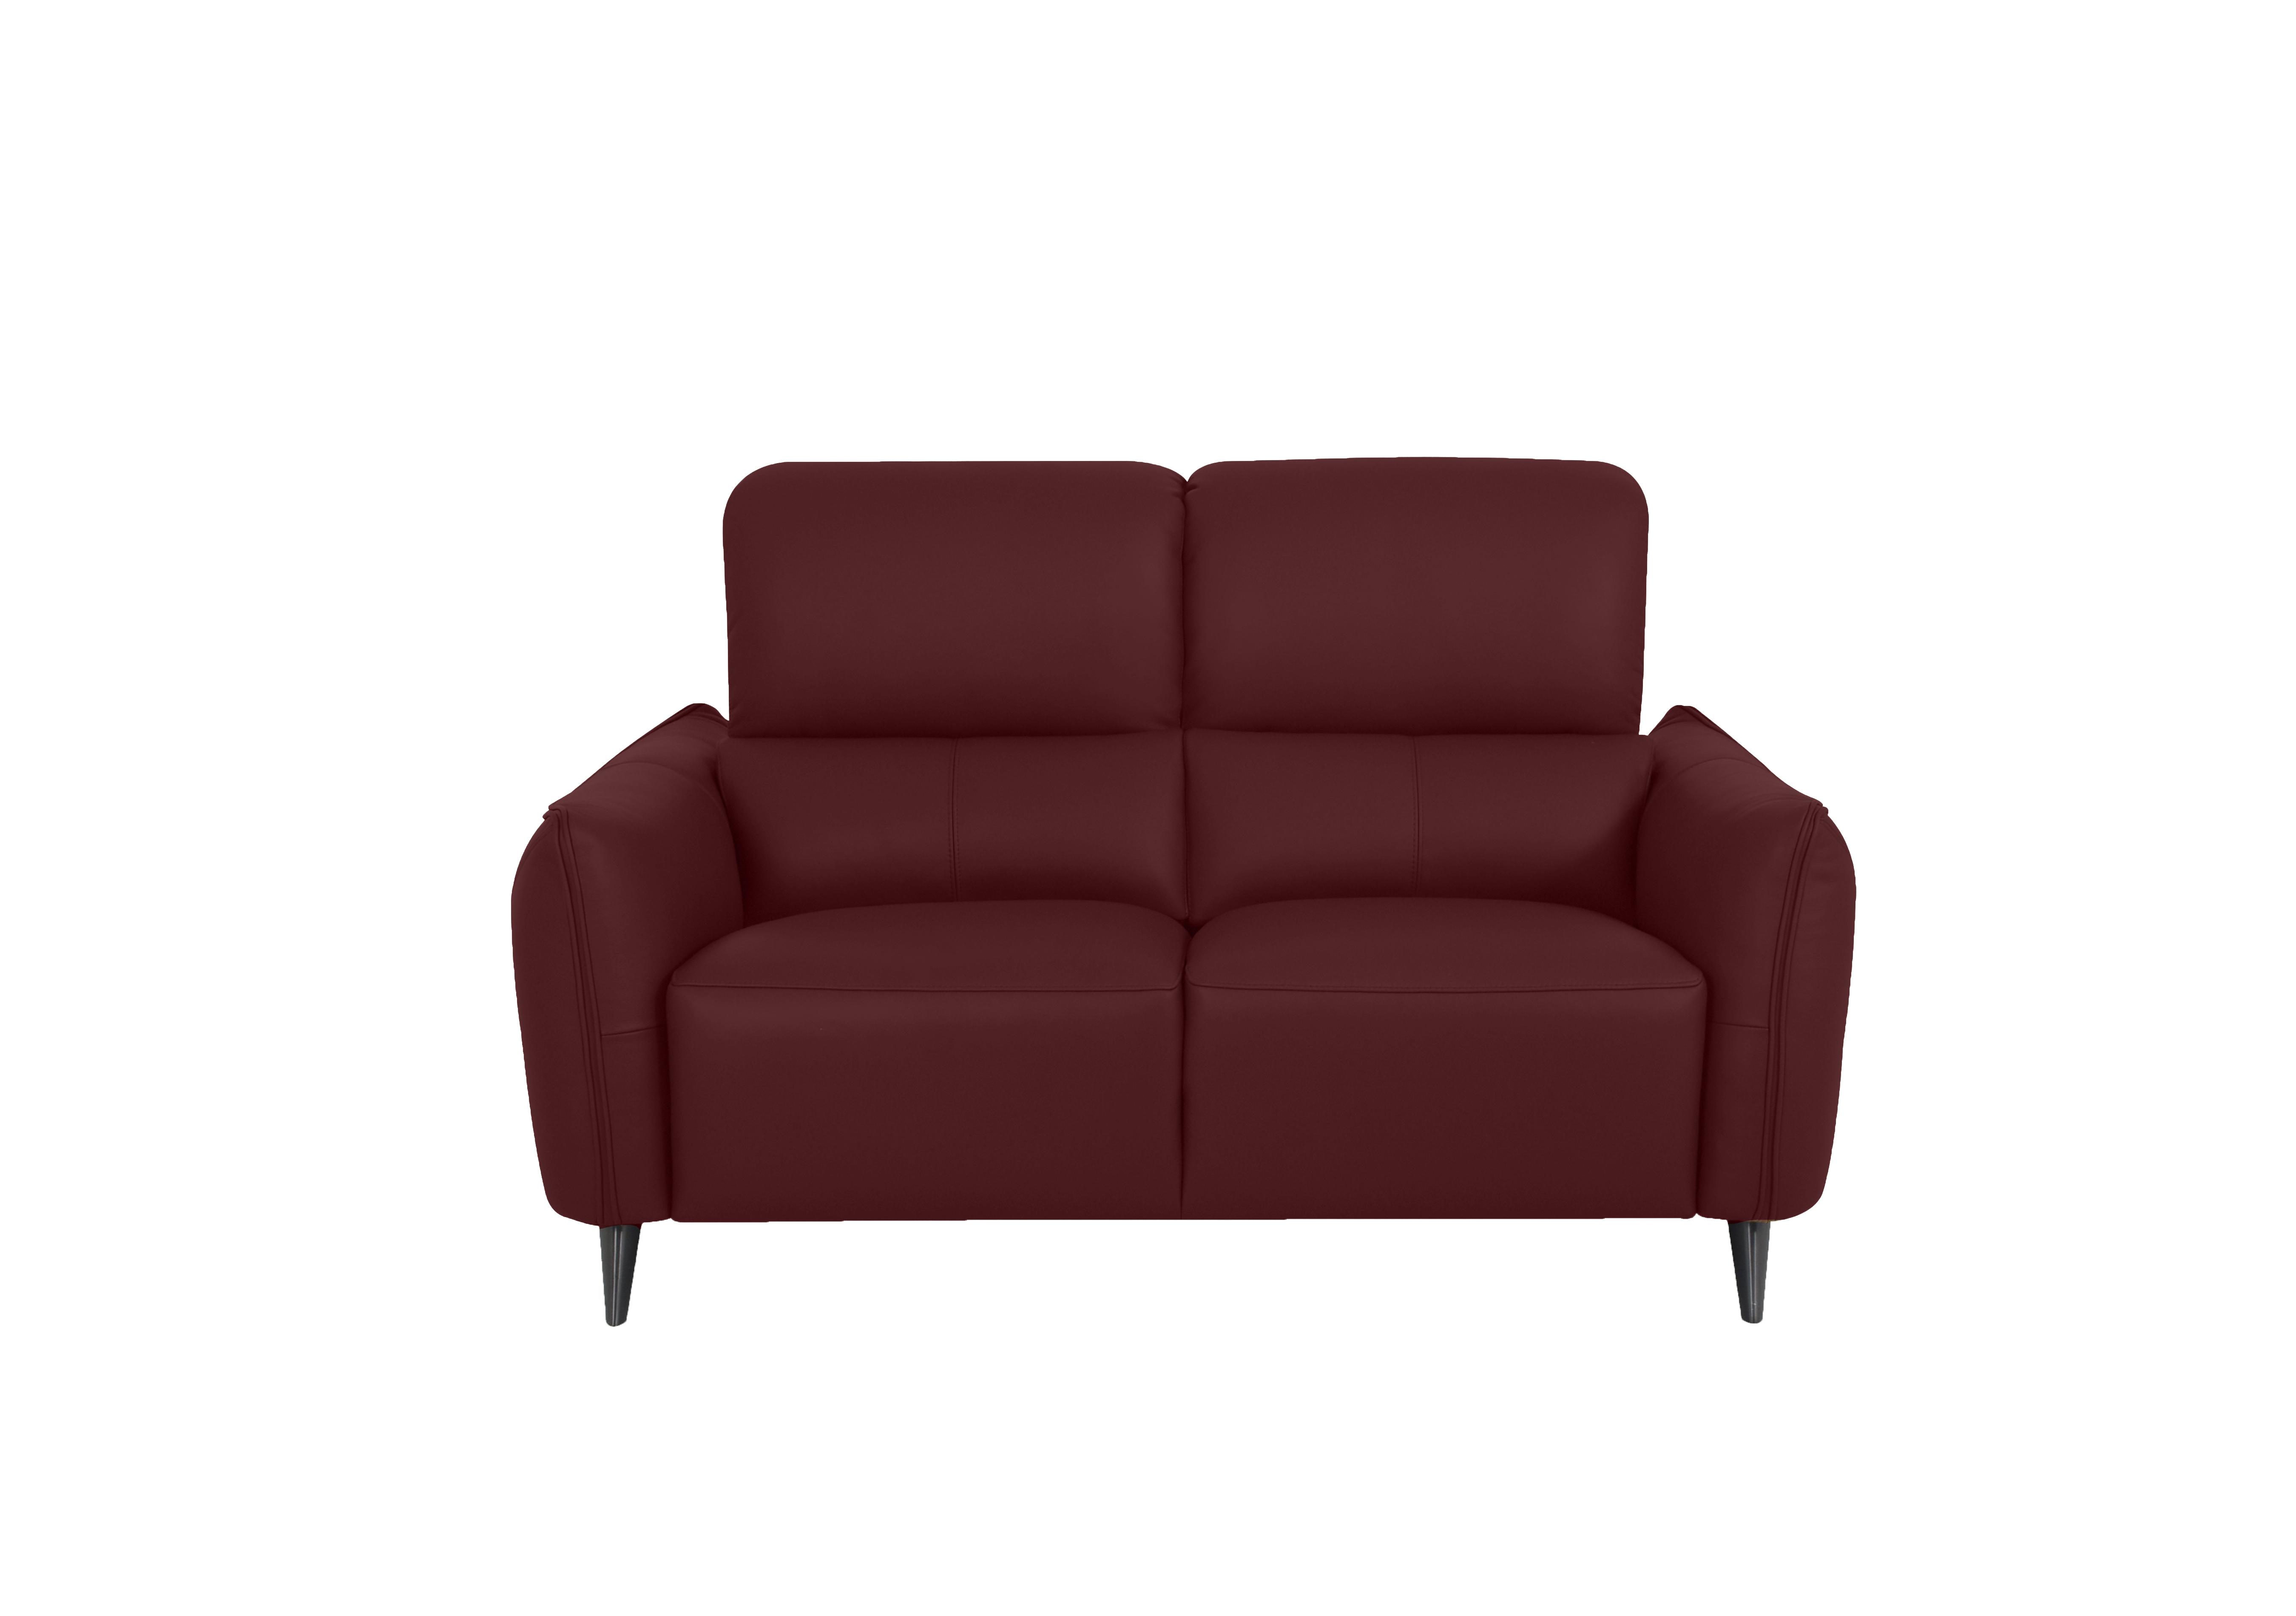 Maddox 2 Seater Leather Sofa in Nn-569e Burgundy on Furniture Village